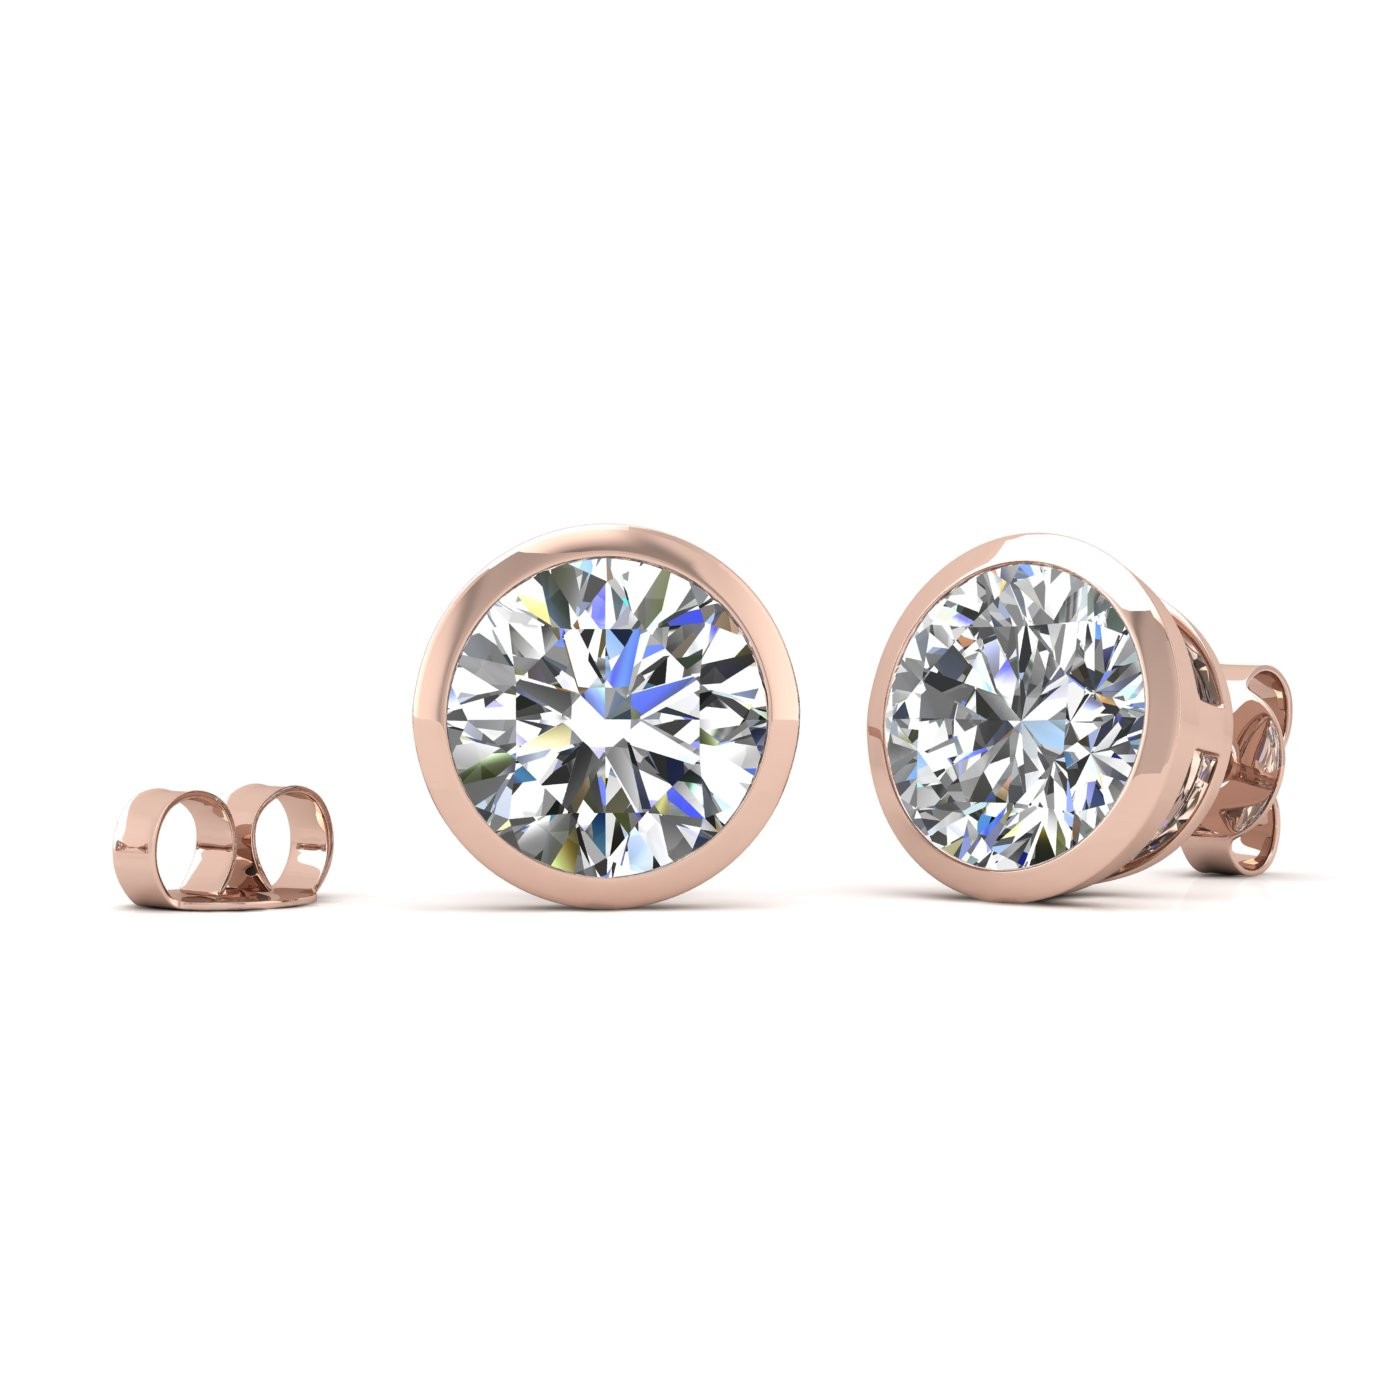 18k rose gold 0,5 ct each (1,0 tcw) round brilliant cut diamond bezel set earring studs Photos & images